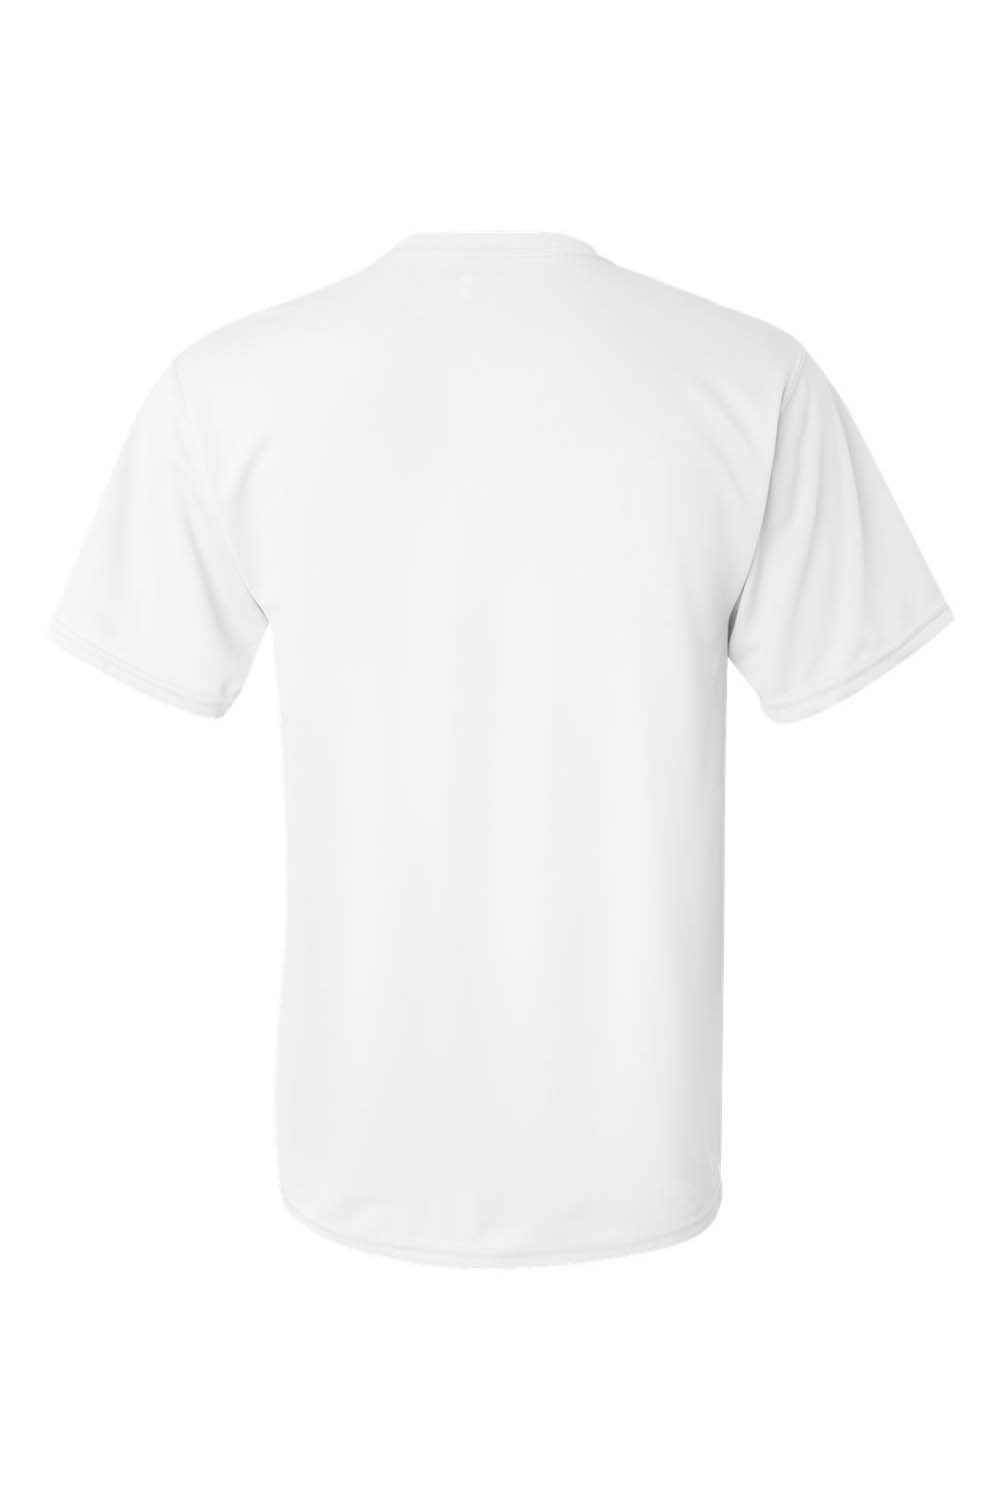 Augusta Sportswear 790 Mens Moisture Wicking Short Sleeve Crewneck T-Shirt White Model Flat Back